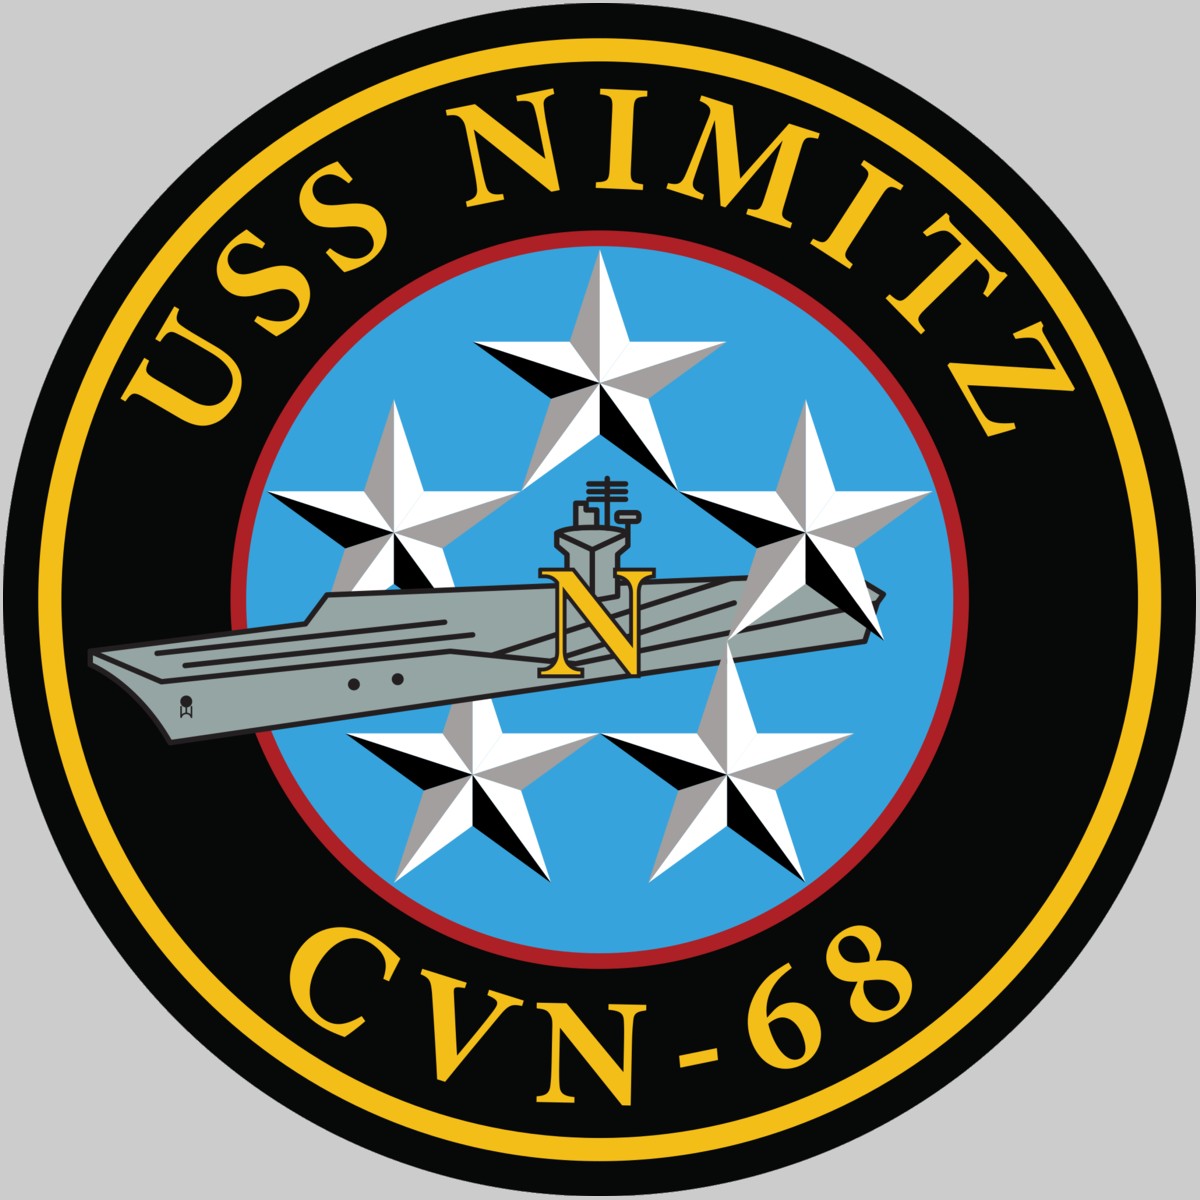 cvn-68 uss nimitz crest insignia patch badge aircraft carrier us navy 04c